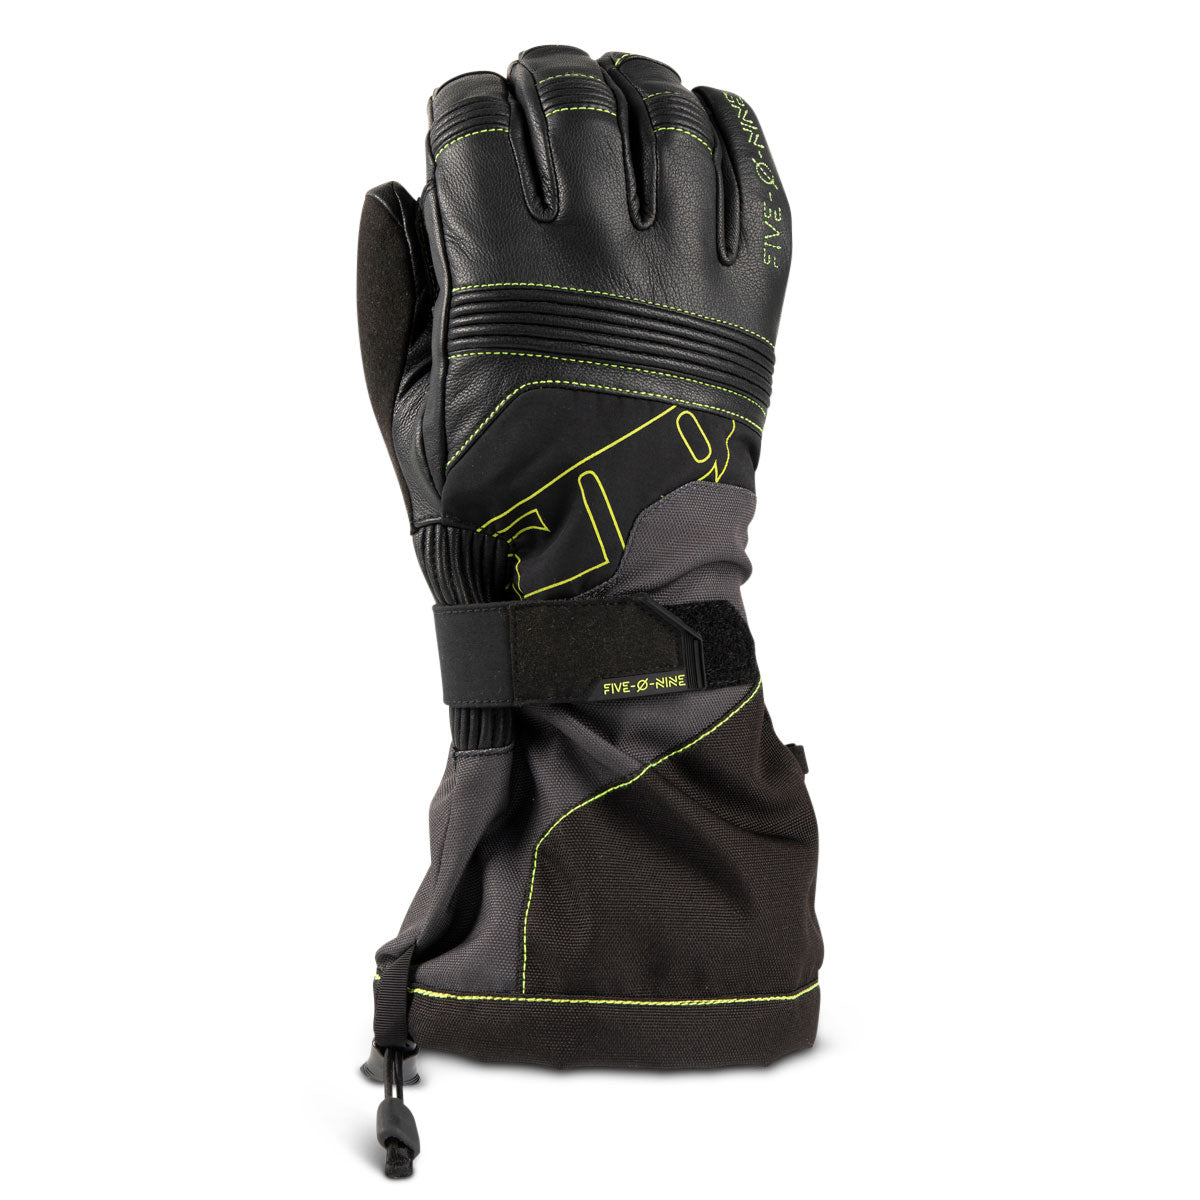 Range Insulated Gloves – 509